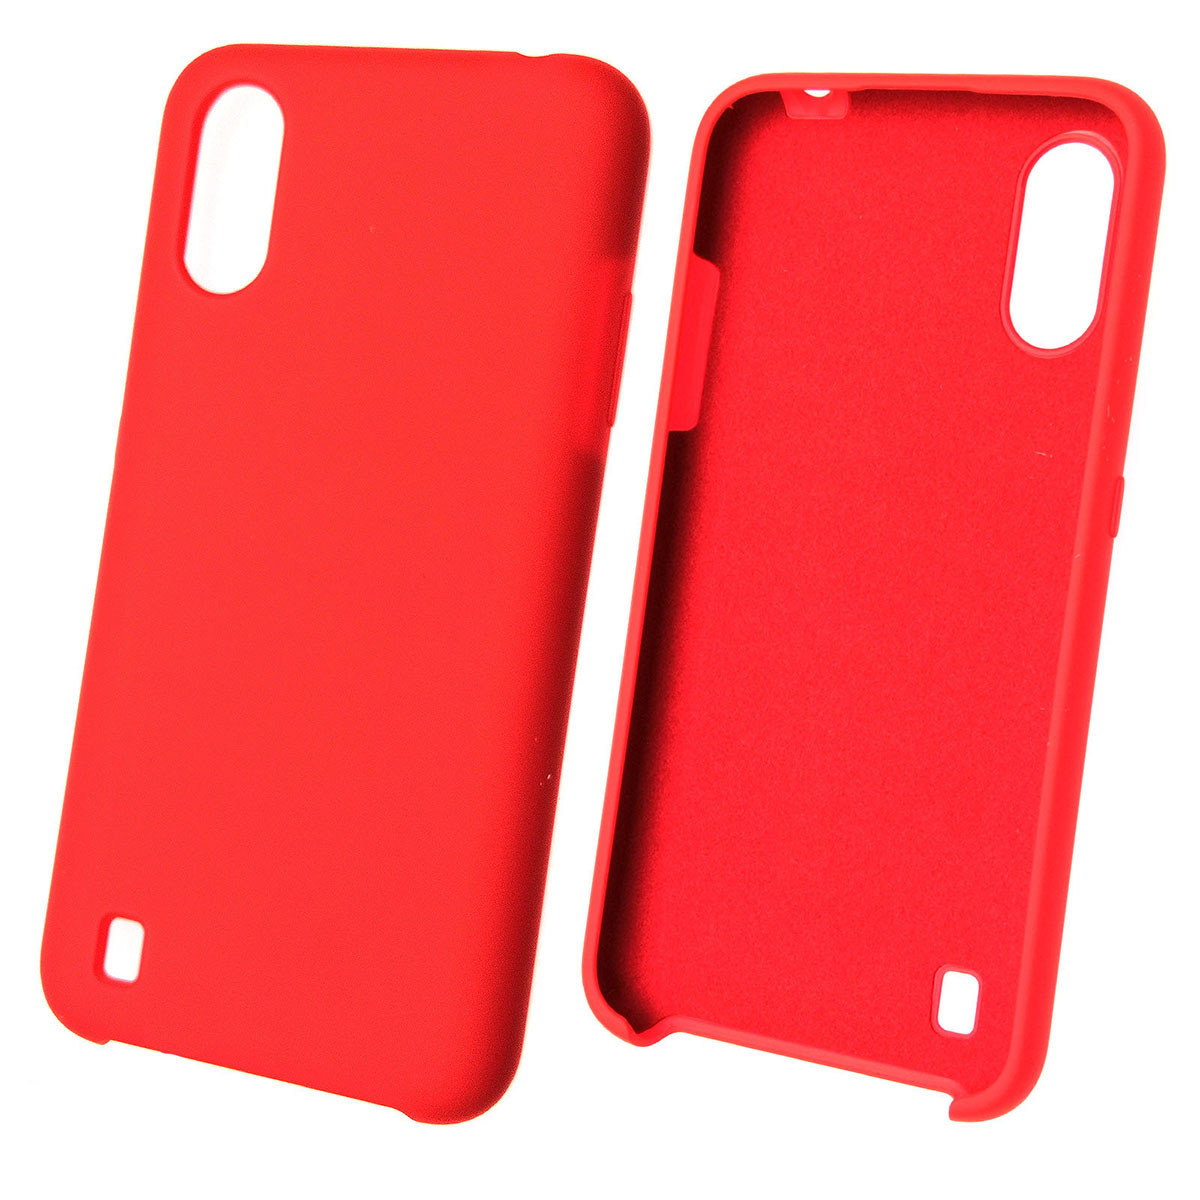 Чехол накладка Silicon Cover для SAMSUNG Galaxy A01 (SM-A015), силикон, бархат, цвет красный